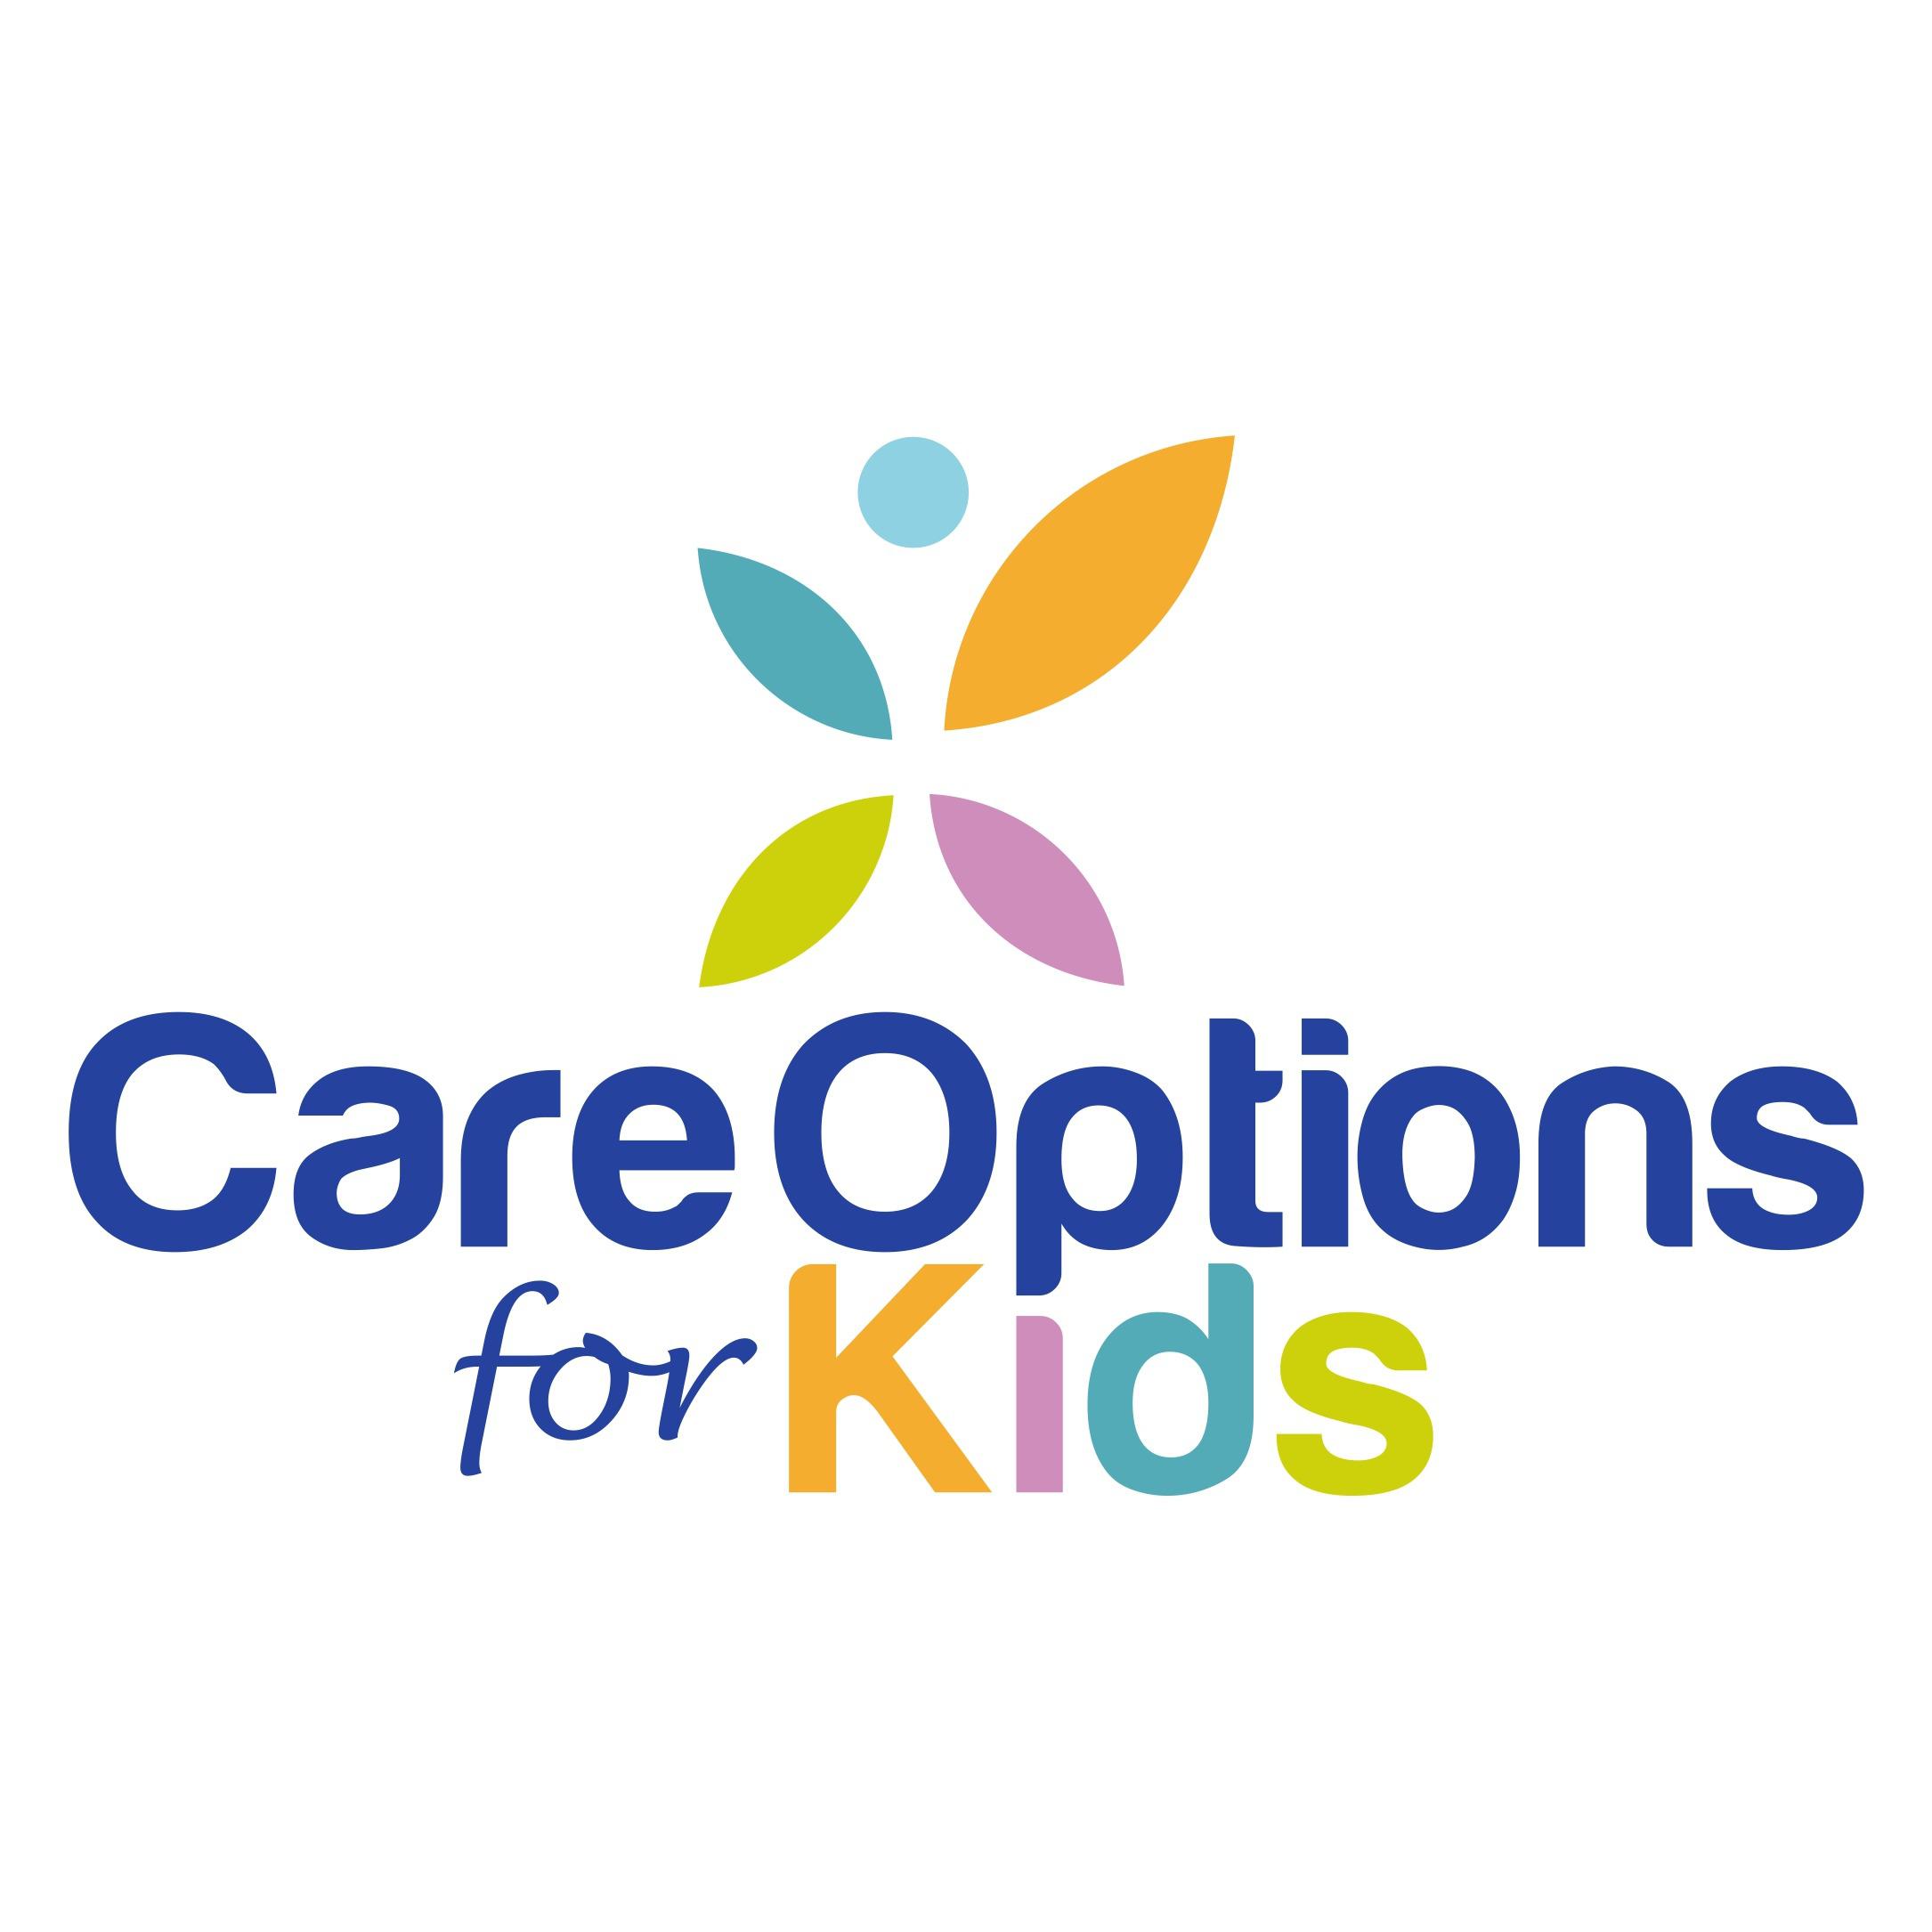 Care Options for Kids - Dallas, TX 75251 - (972)756-0500 | ShowMeLocal.com